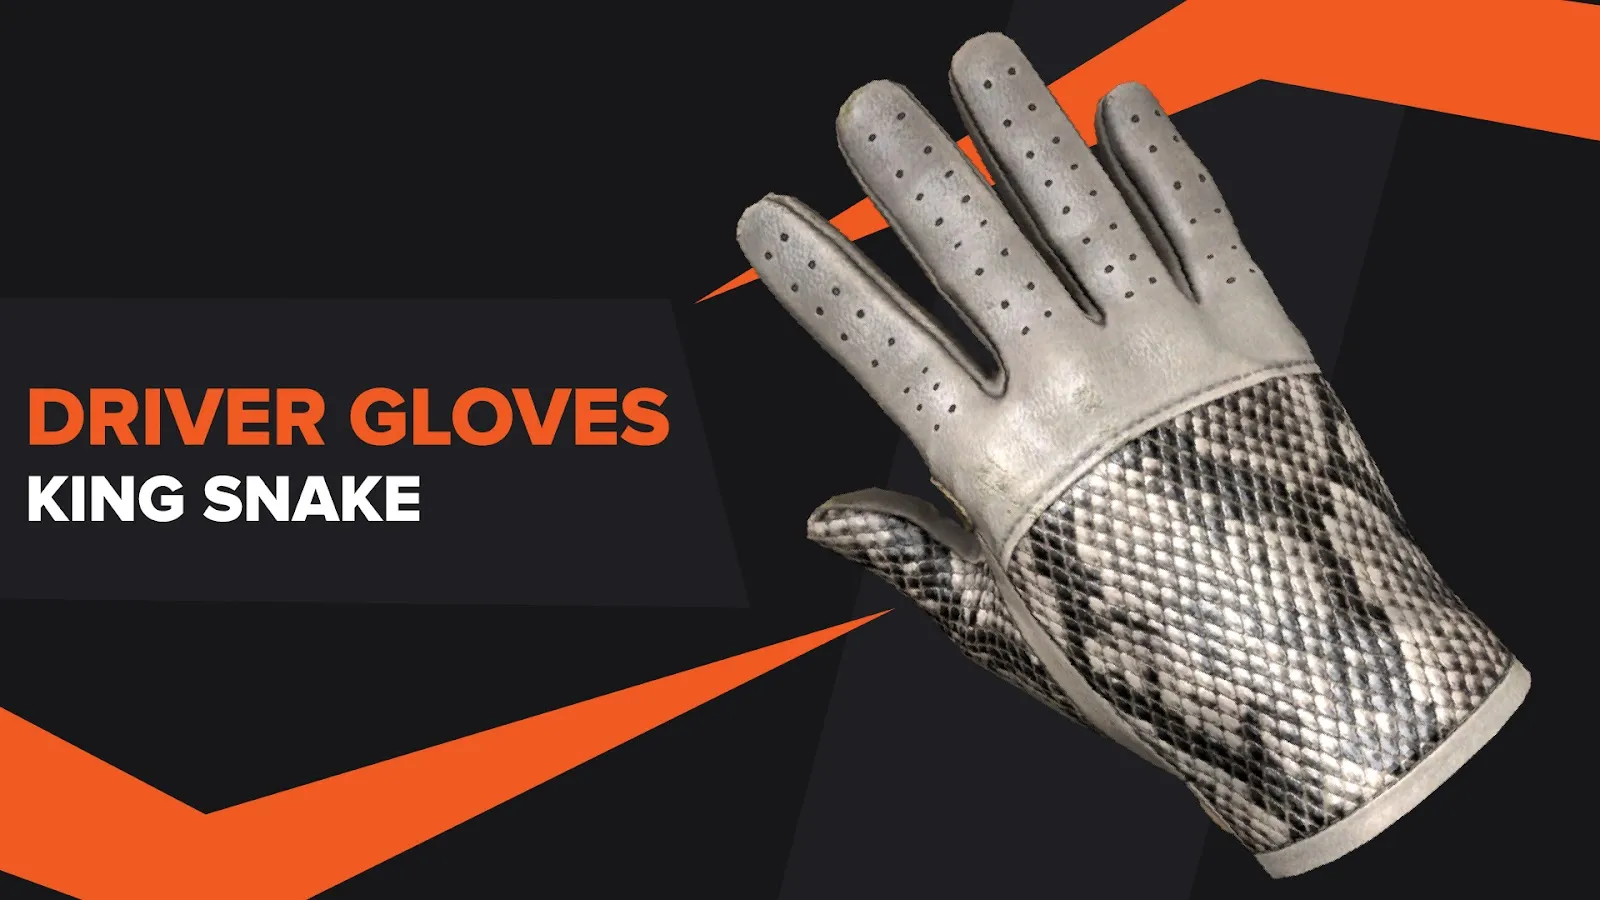 Most Expensive CSGO Skins - King Snake Driver Gloves